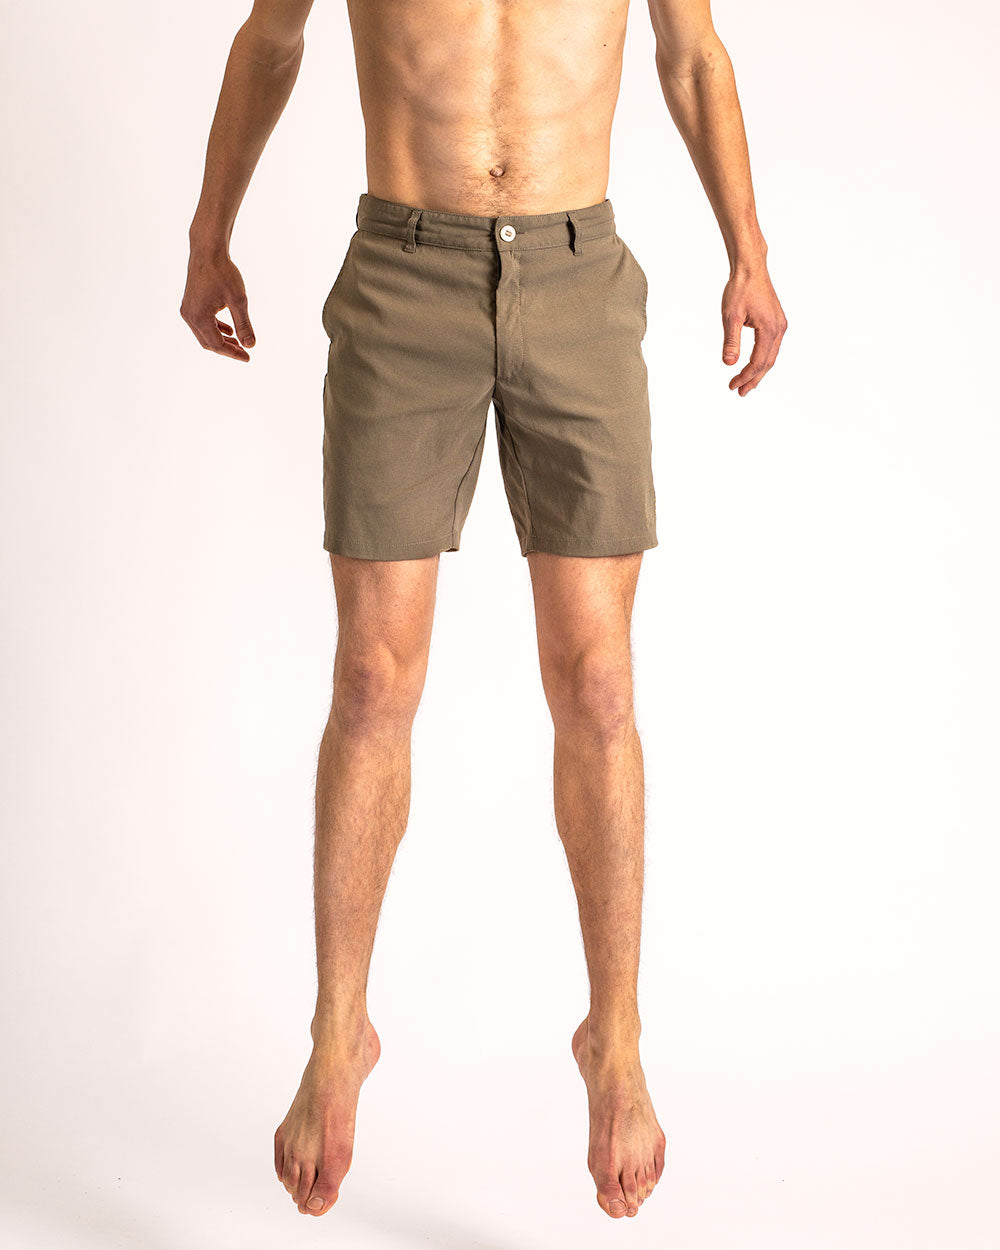 A man wearing the Dusty Desert Shorts.